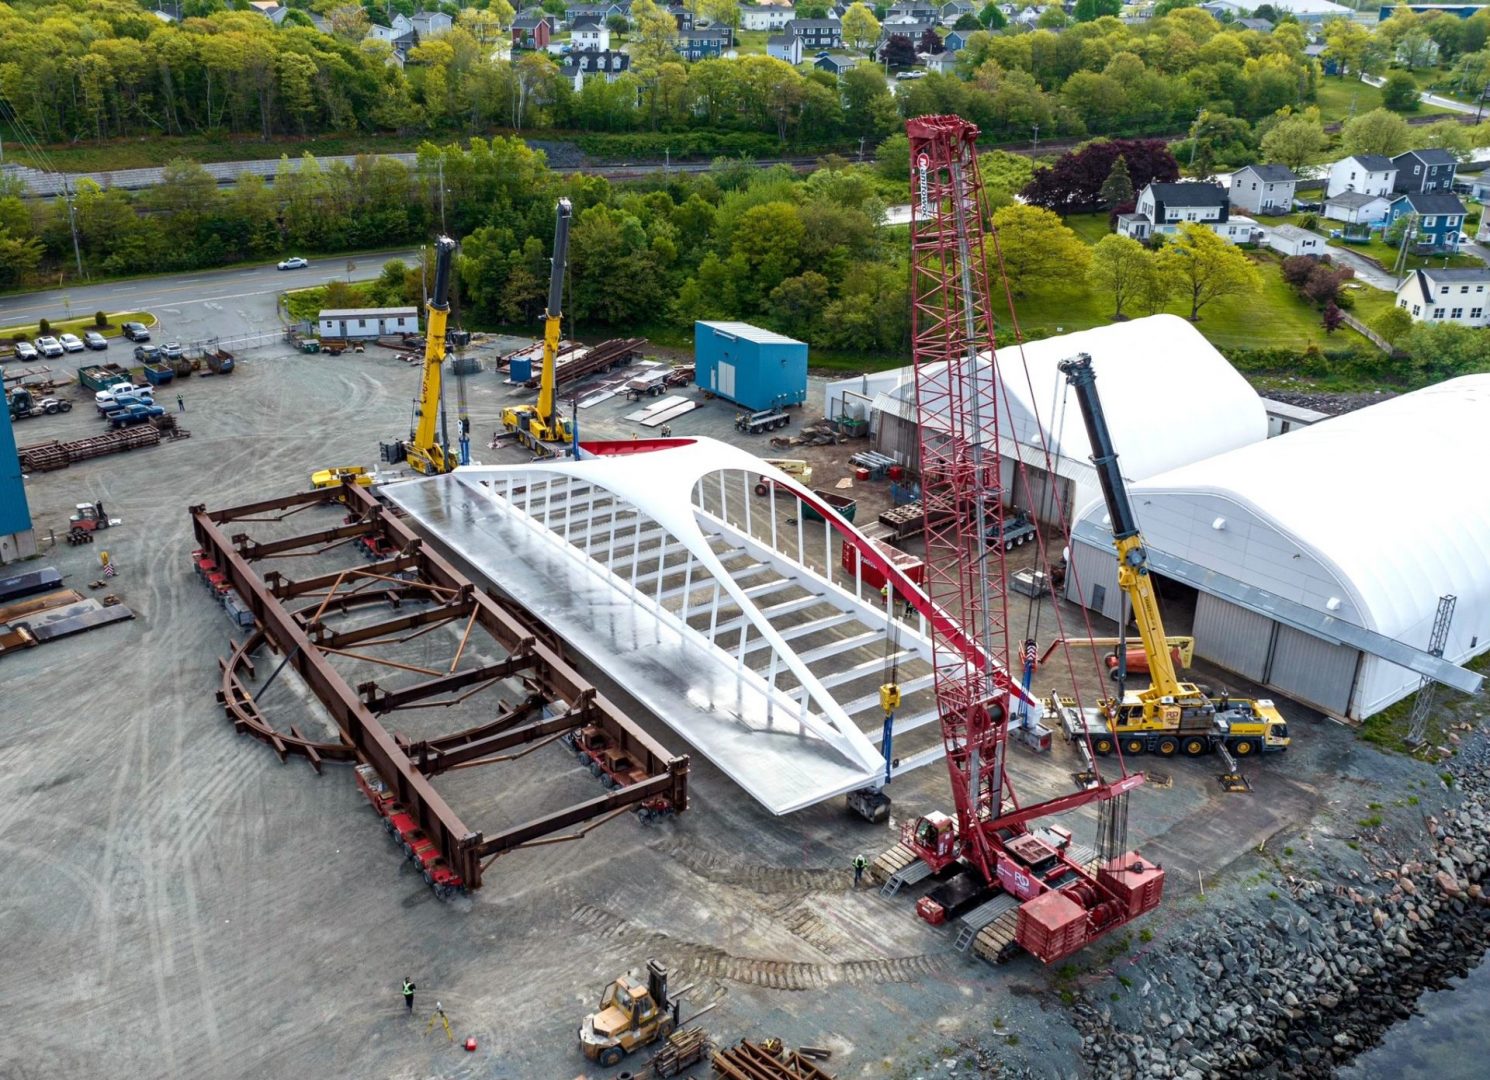 Nova Scotia’s R&D Crane performs synchronized lift of major Toronto bridge